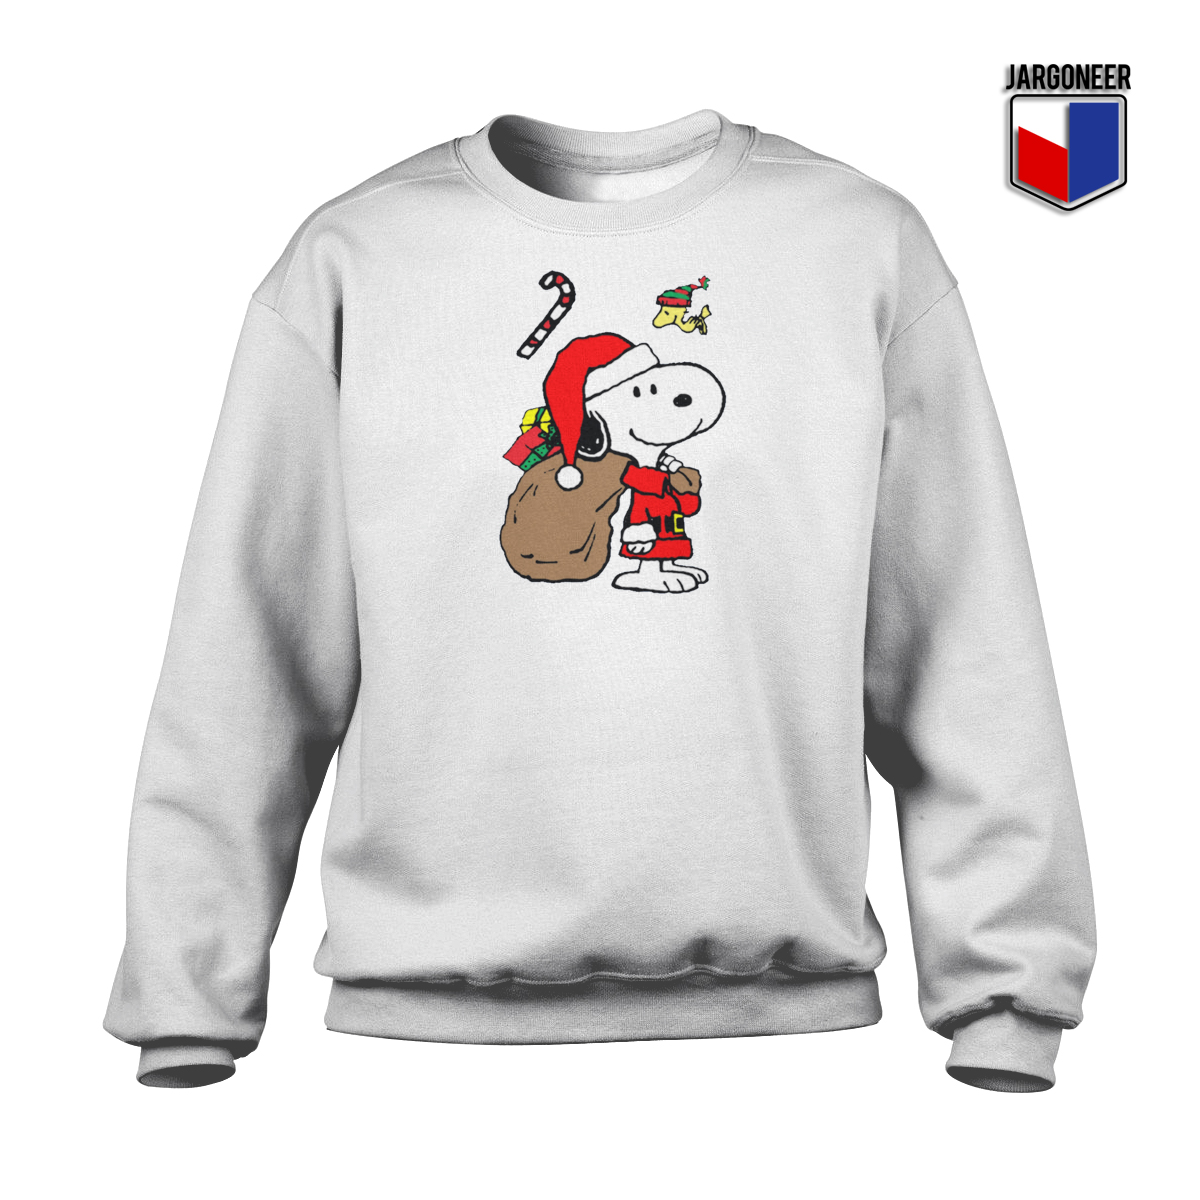 Snoopy Santa Christmas Sweatshirt - Shop Unique Graphic Cool Shirt Designs